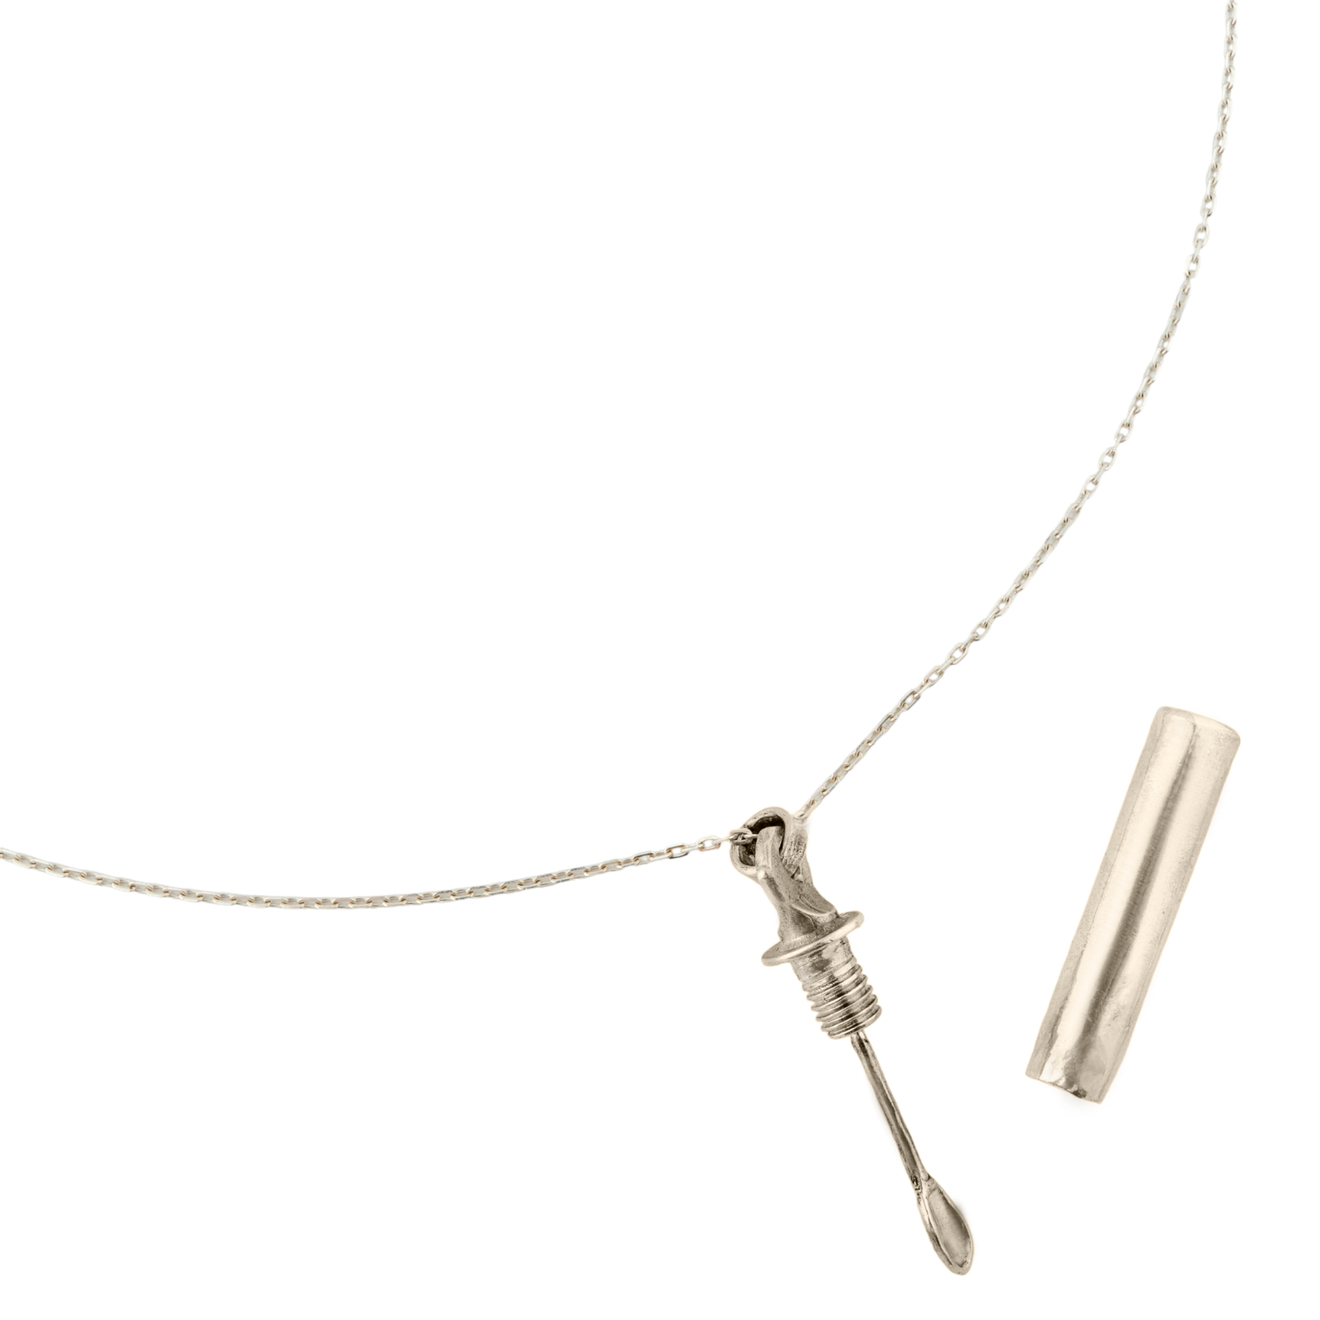 Vechno Подвеска SCRT POLISH PENDANT 14 5mm 14k gold inlaid zircon pleated bow pendant single pendant diy bracelet earrings jewelry pendant